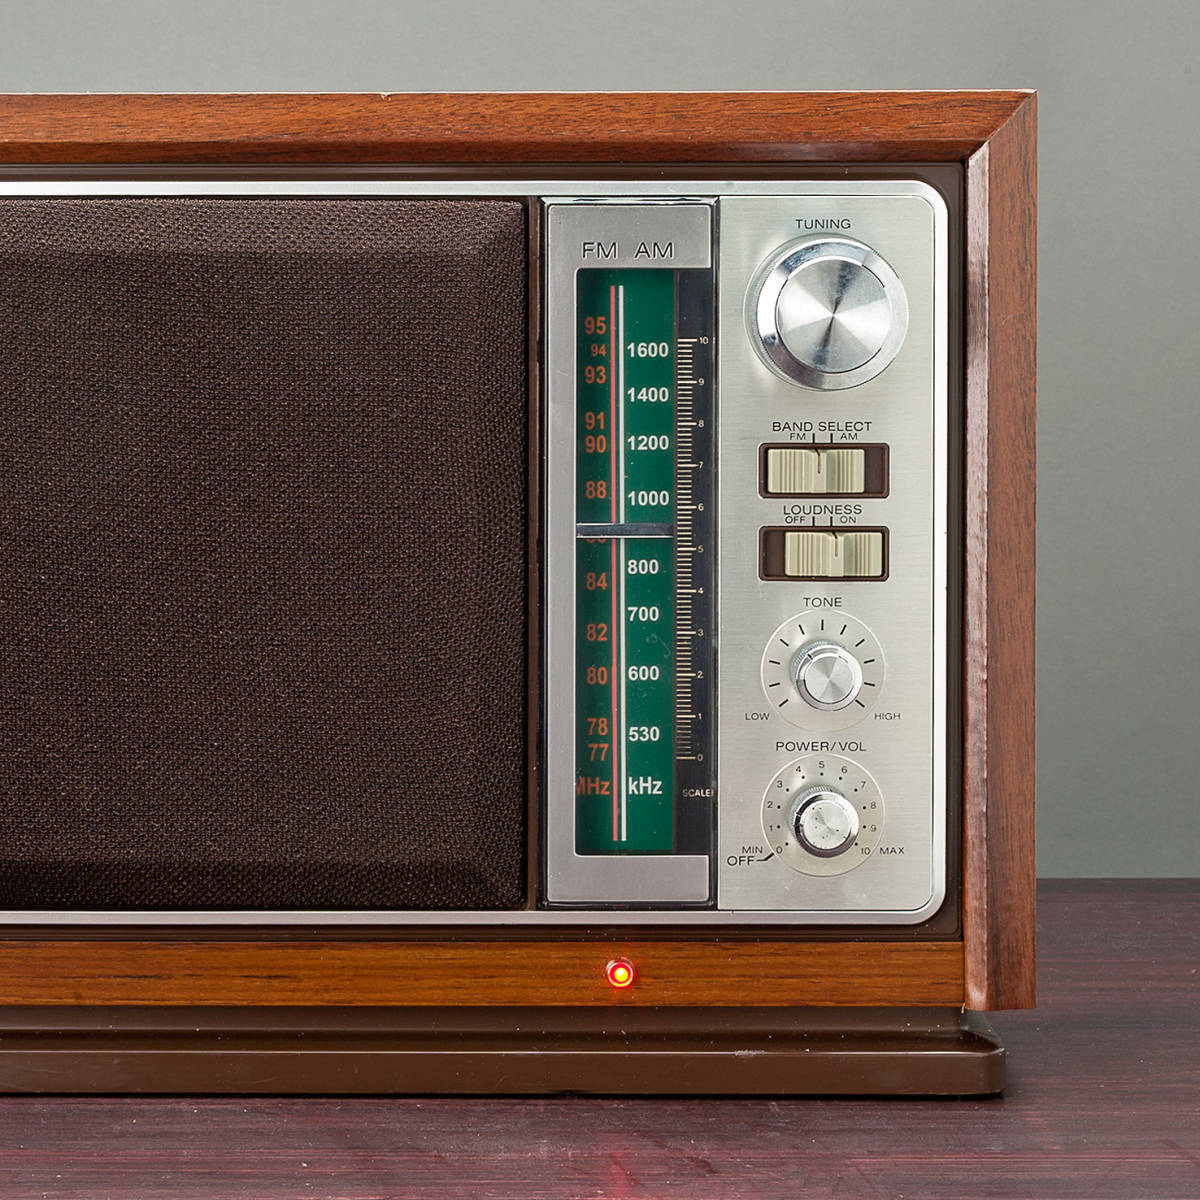 SONY トランジスターラジオ ICF-9740 AM/FM2BAND FMは95MHzまで受信OK！インテリア性抜群の修正修復整備品 _画像5